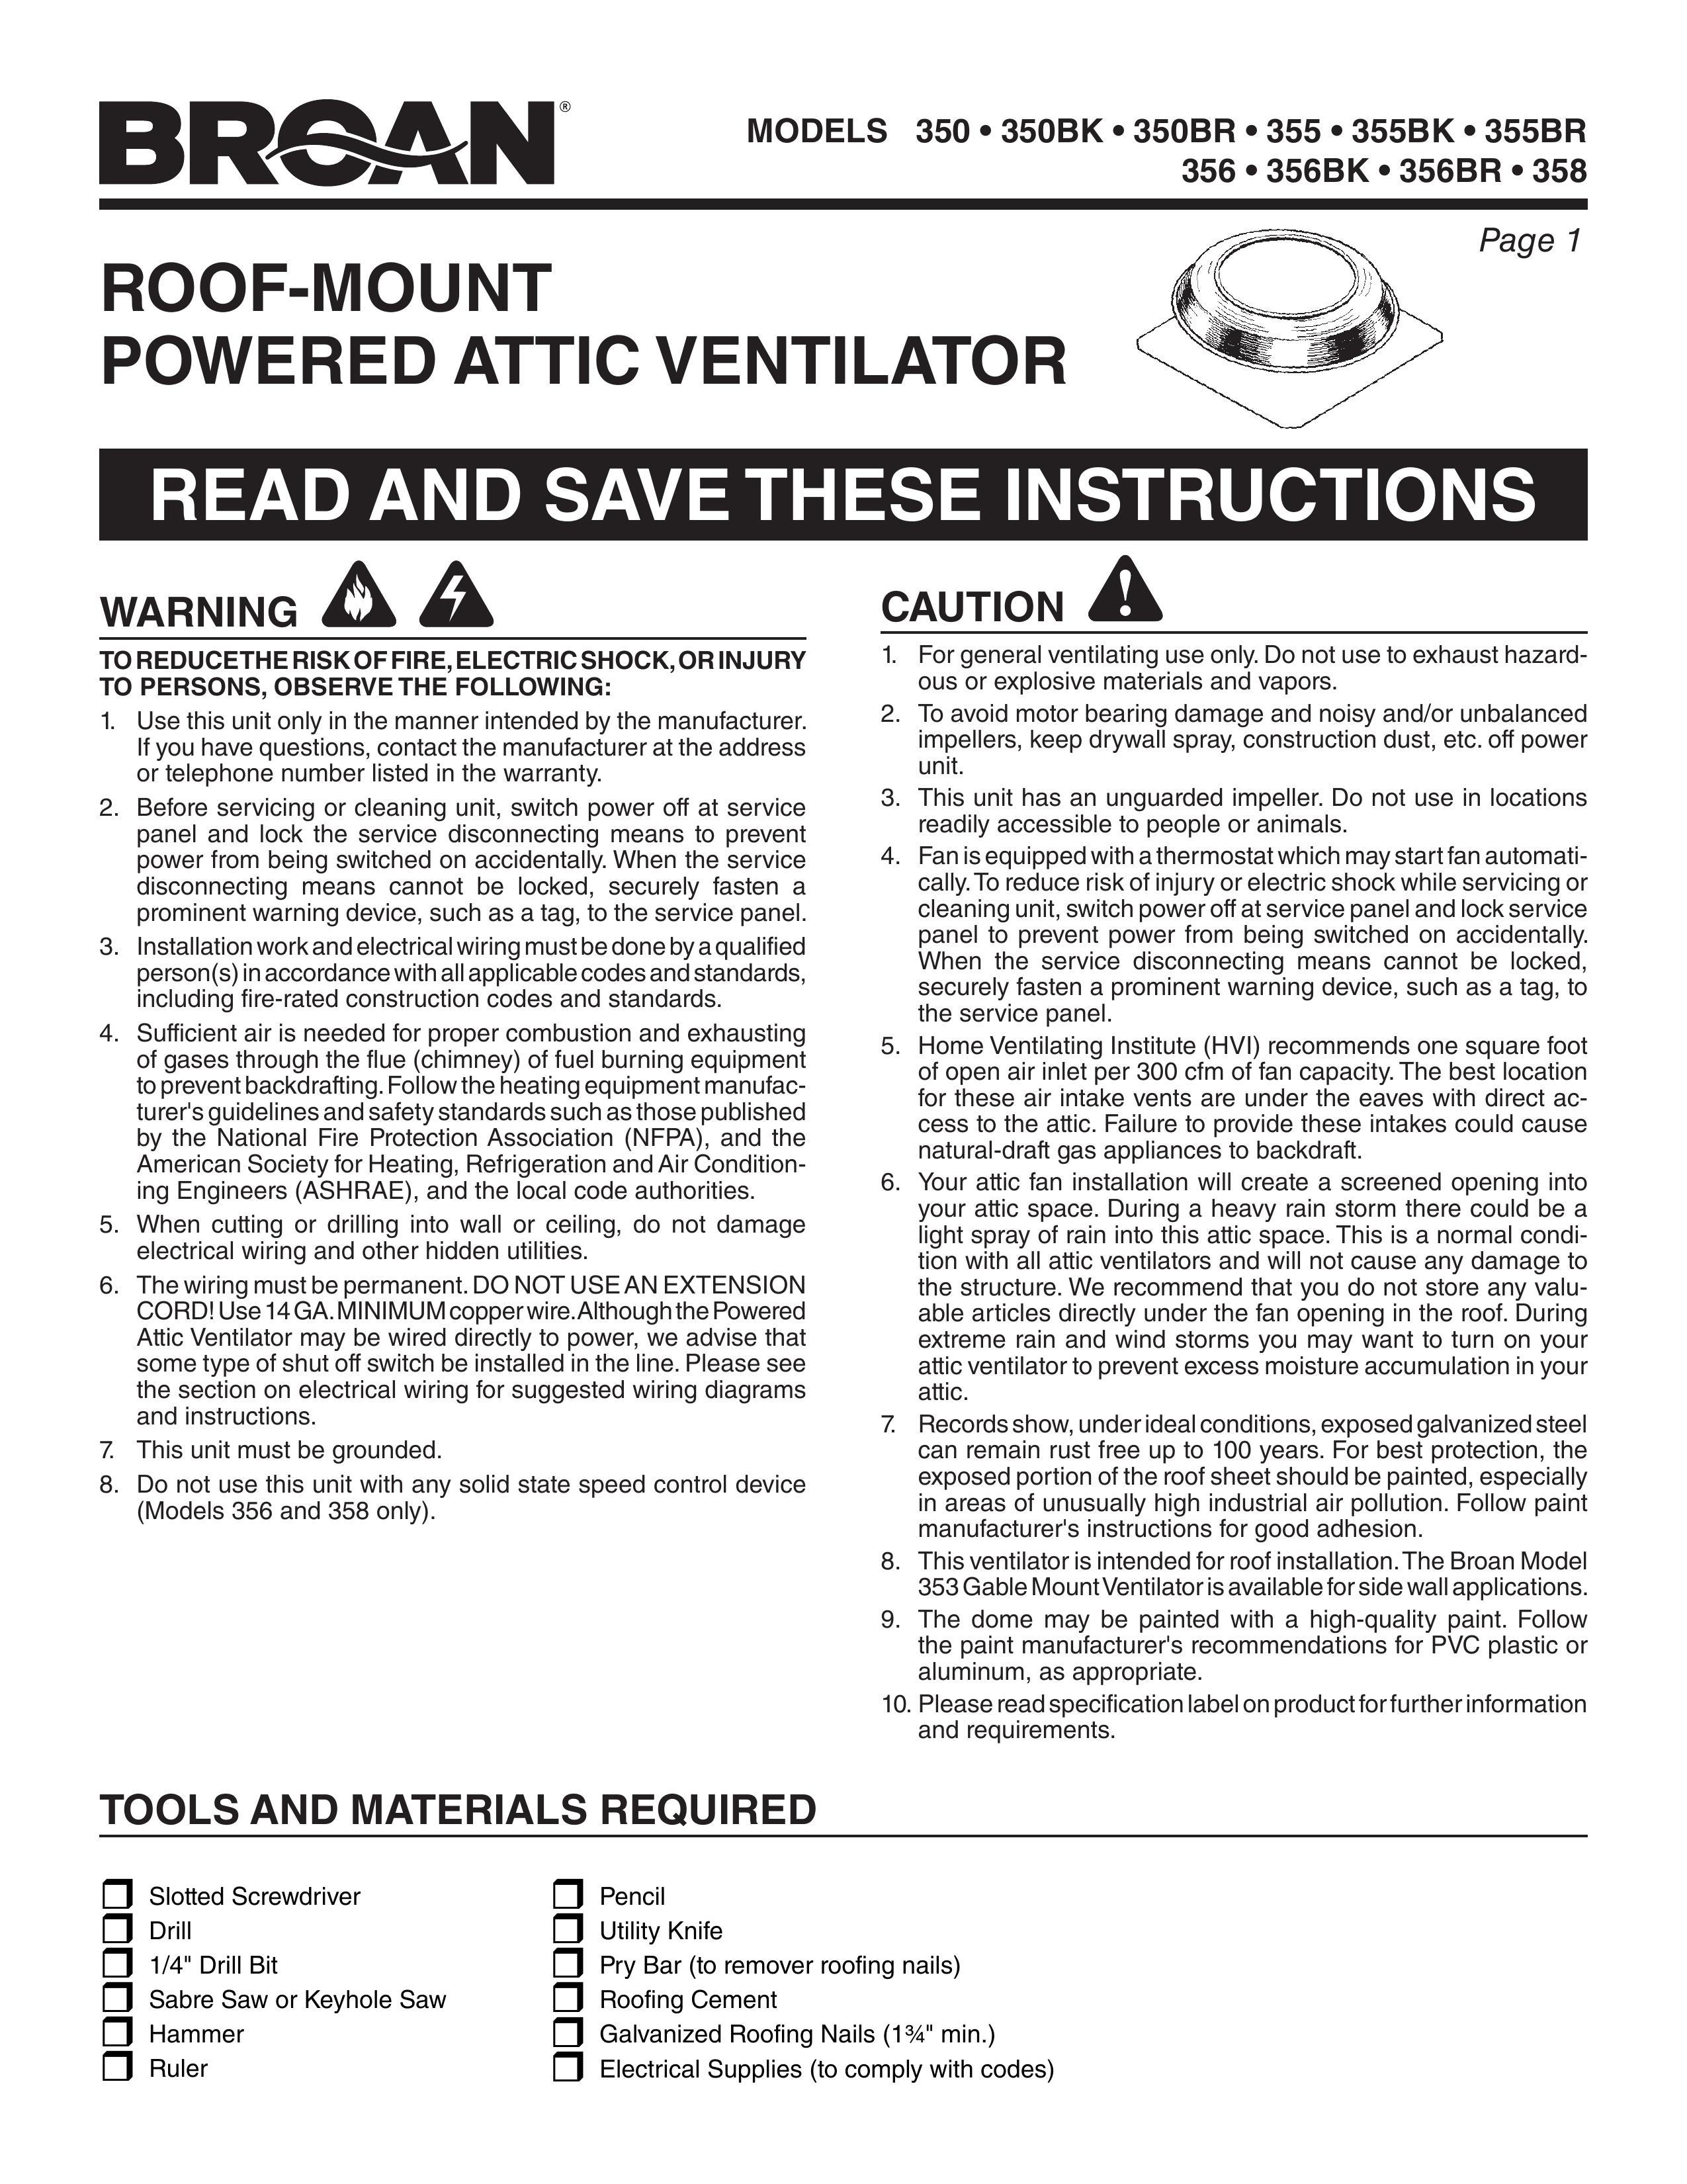 Broan 356BR Ventilation Hood User Manual